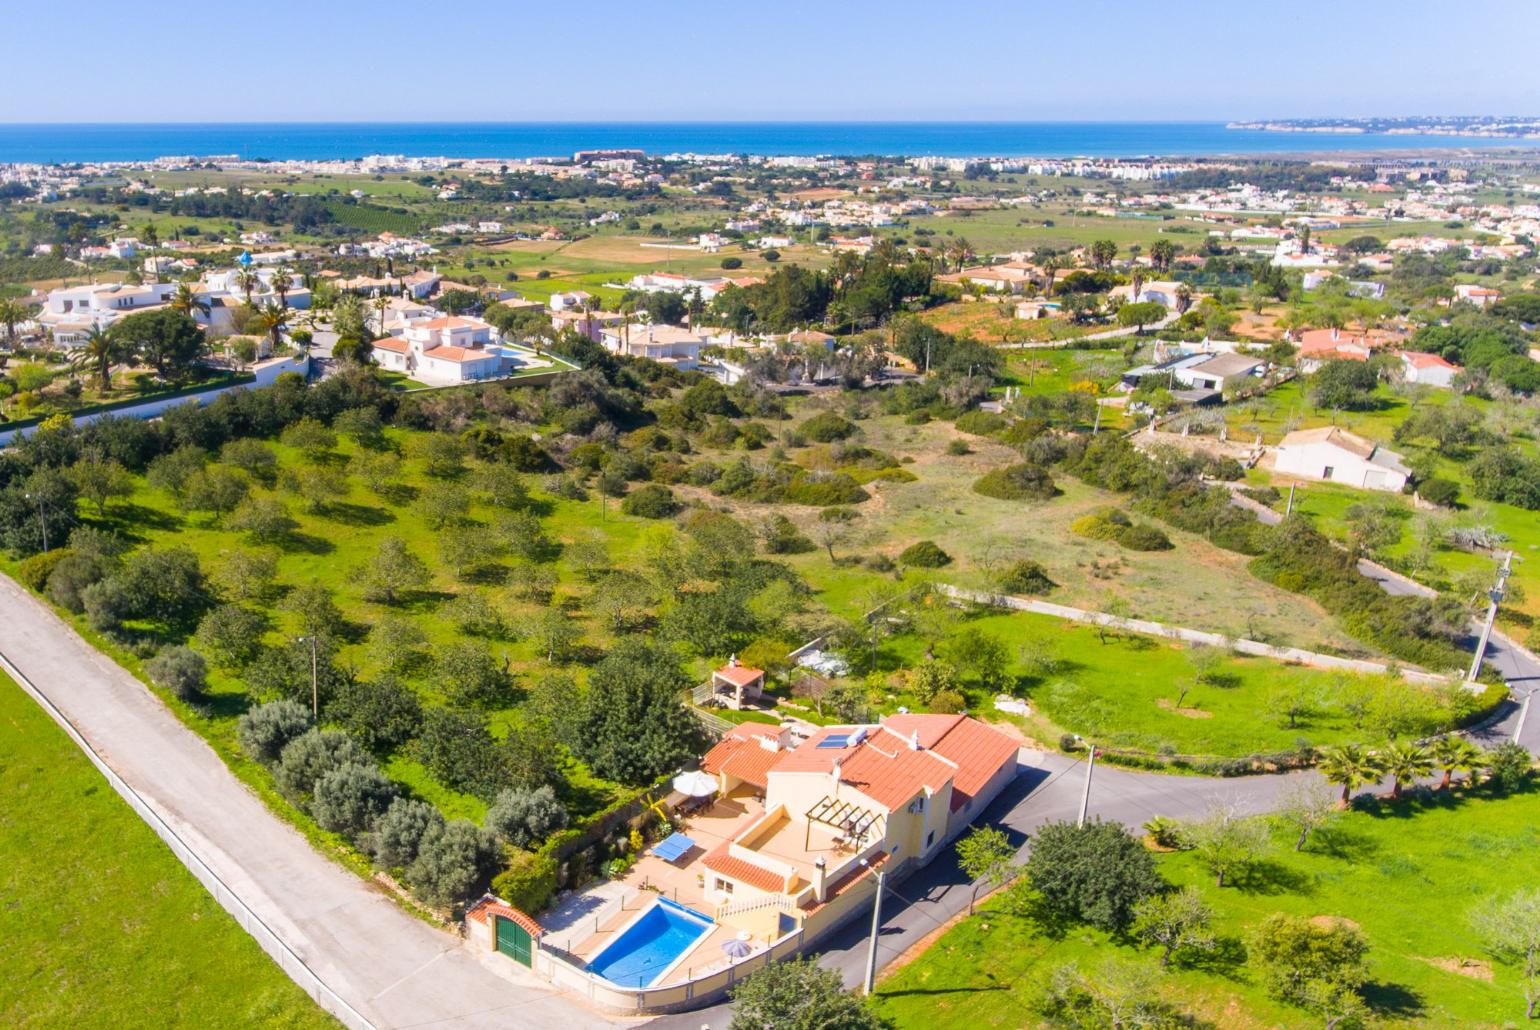  Aerial view showing location of Casa Da Encosta